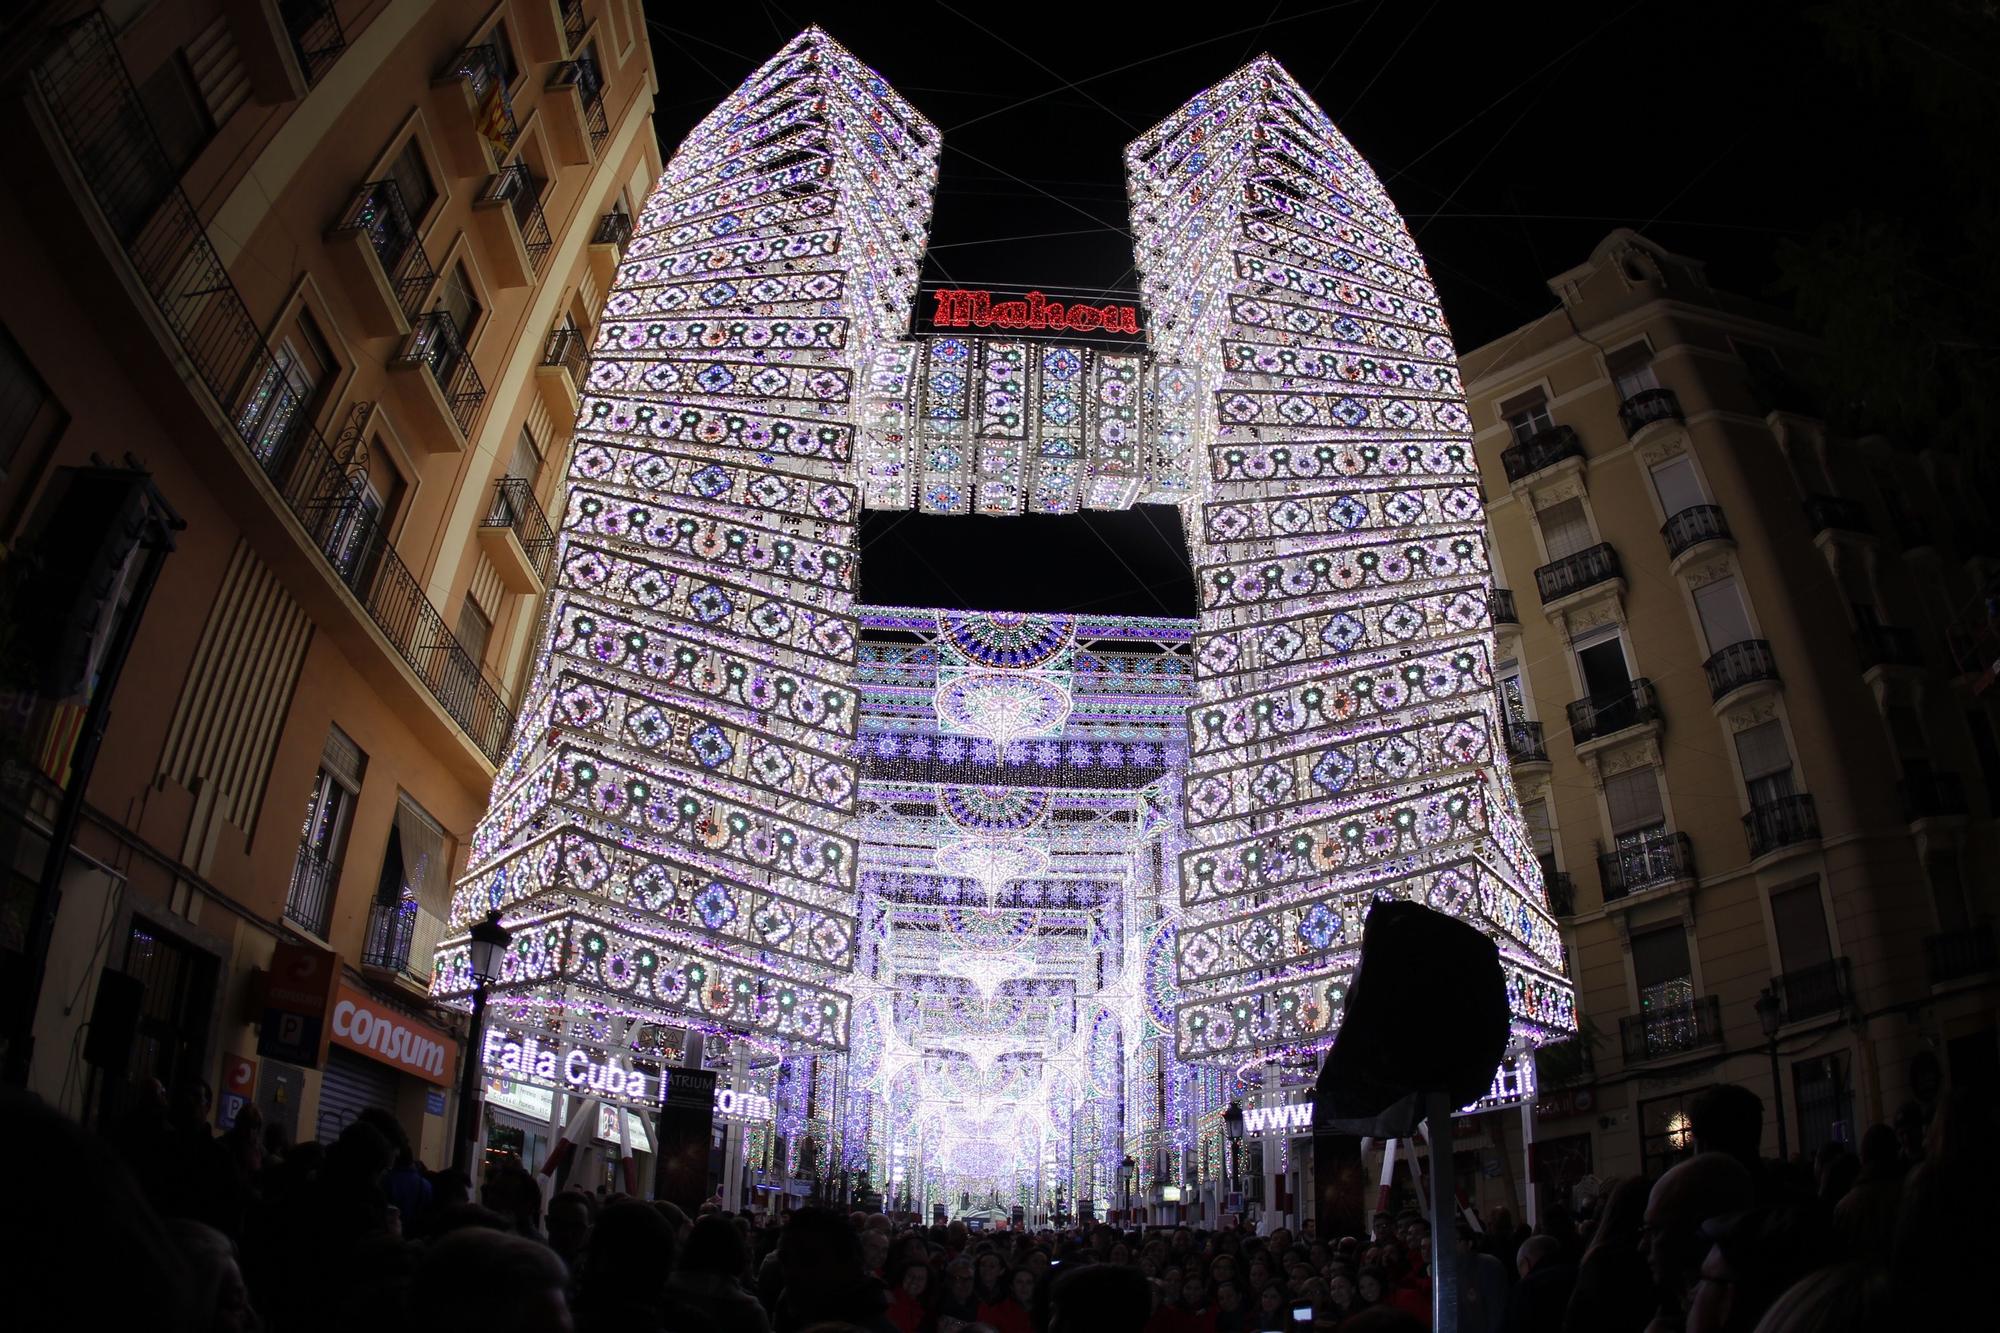 Galería nostálgica de las calles iluminadas en Fallas (2010-2020)